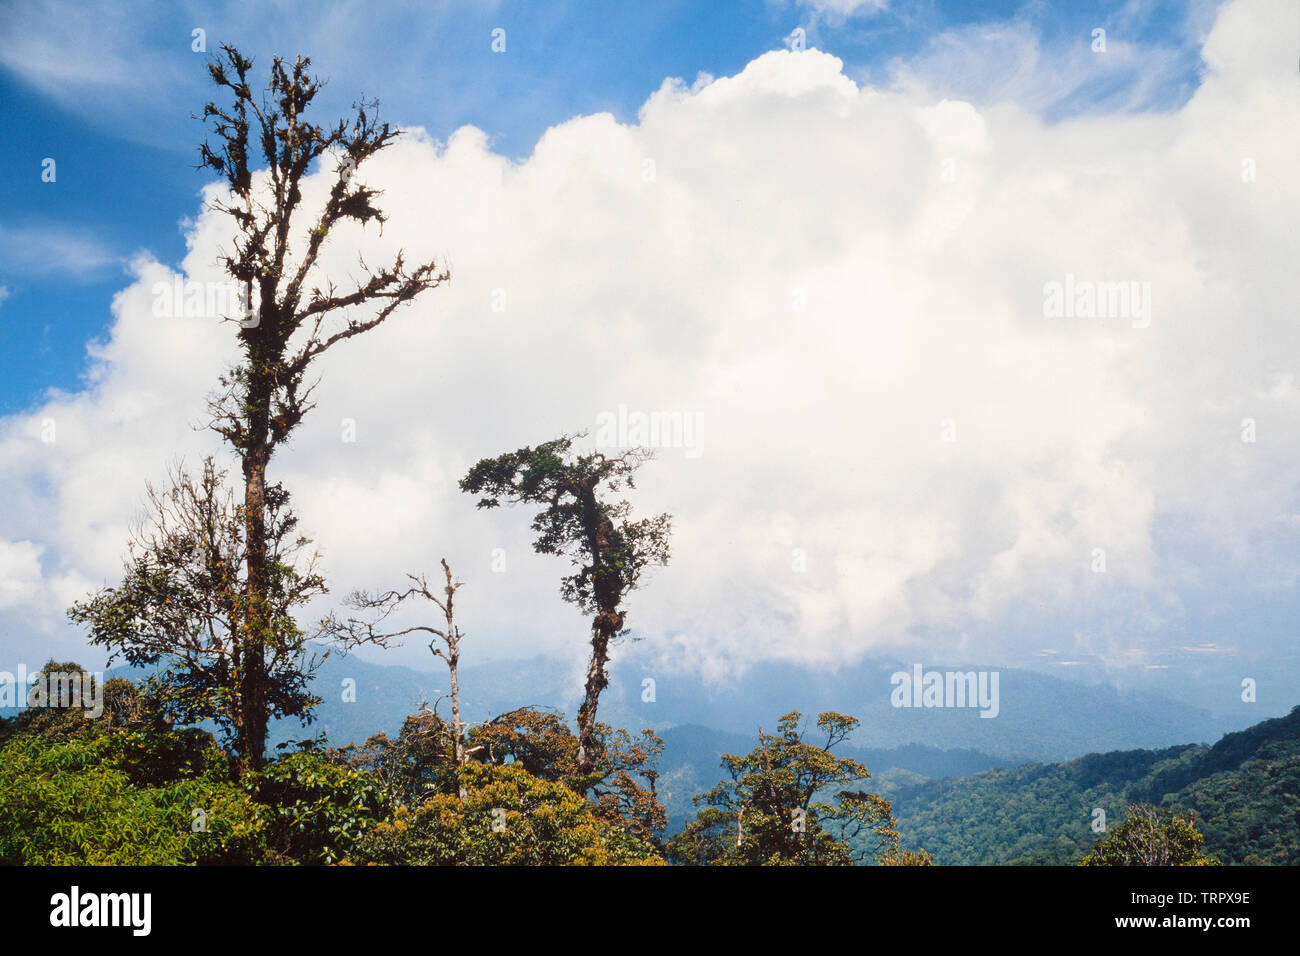 Mount Kinabalu National Park, Sabah, East Malaysia. Summit trail, view AT 3200 meteres, showing scrub like habitat. Stock Photo